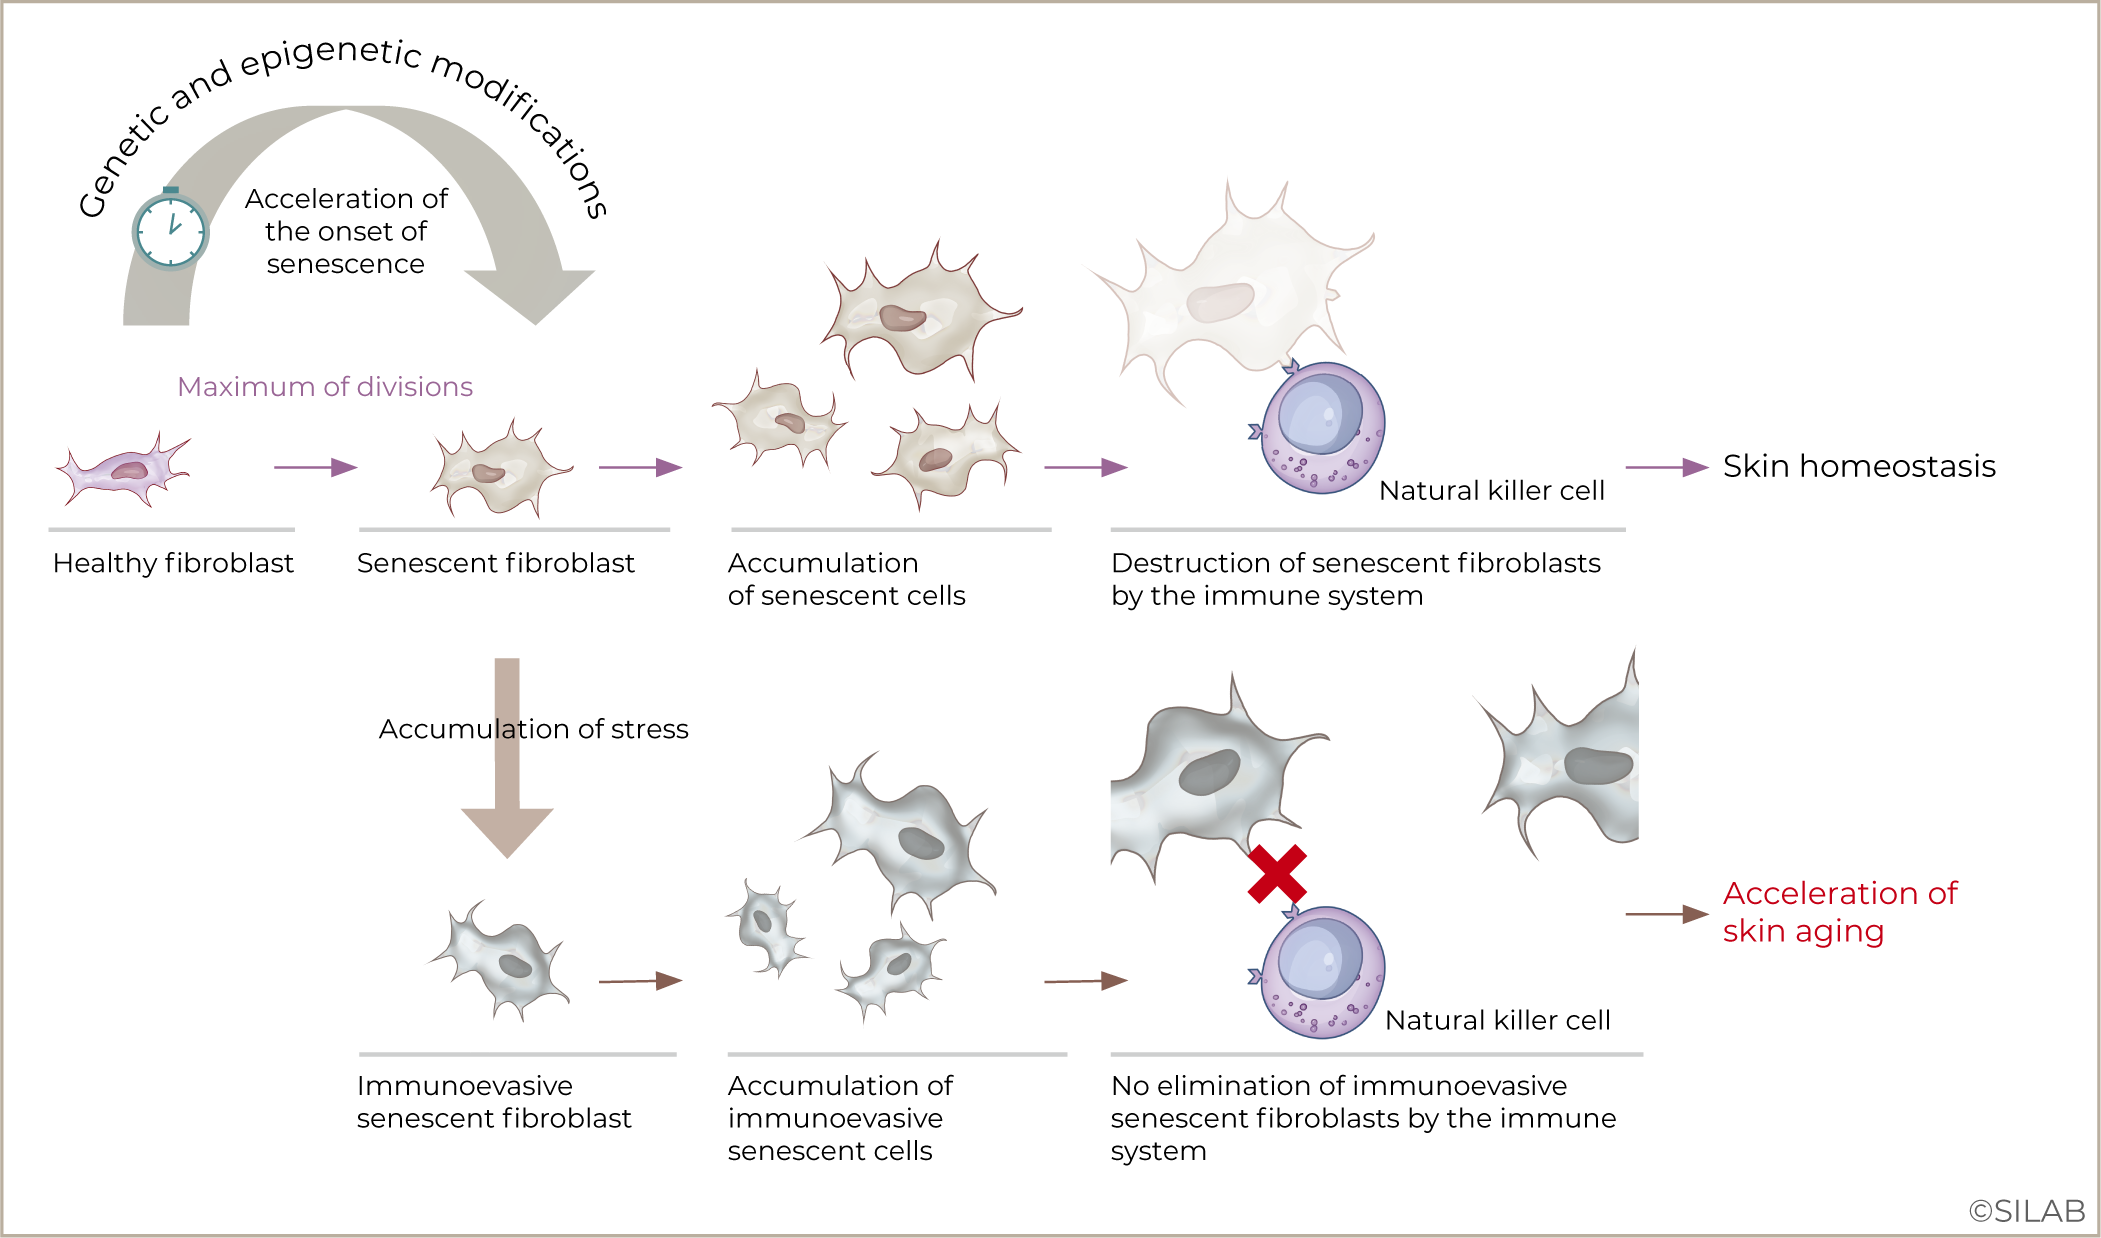 Participation of immunoevasive senescent fibroblasts in the acceleration of skin aging